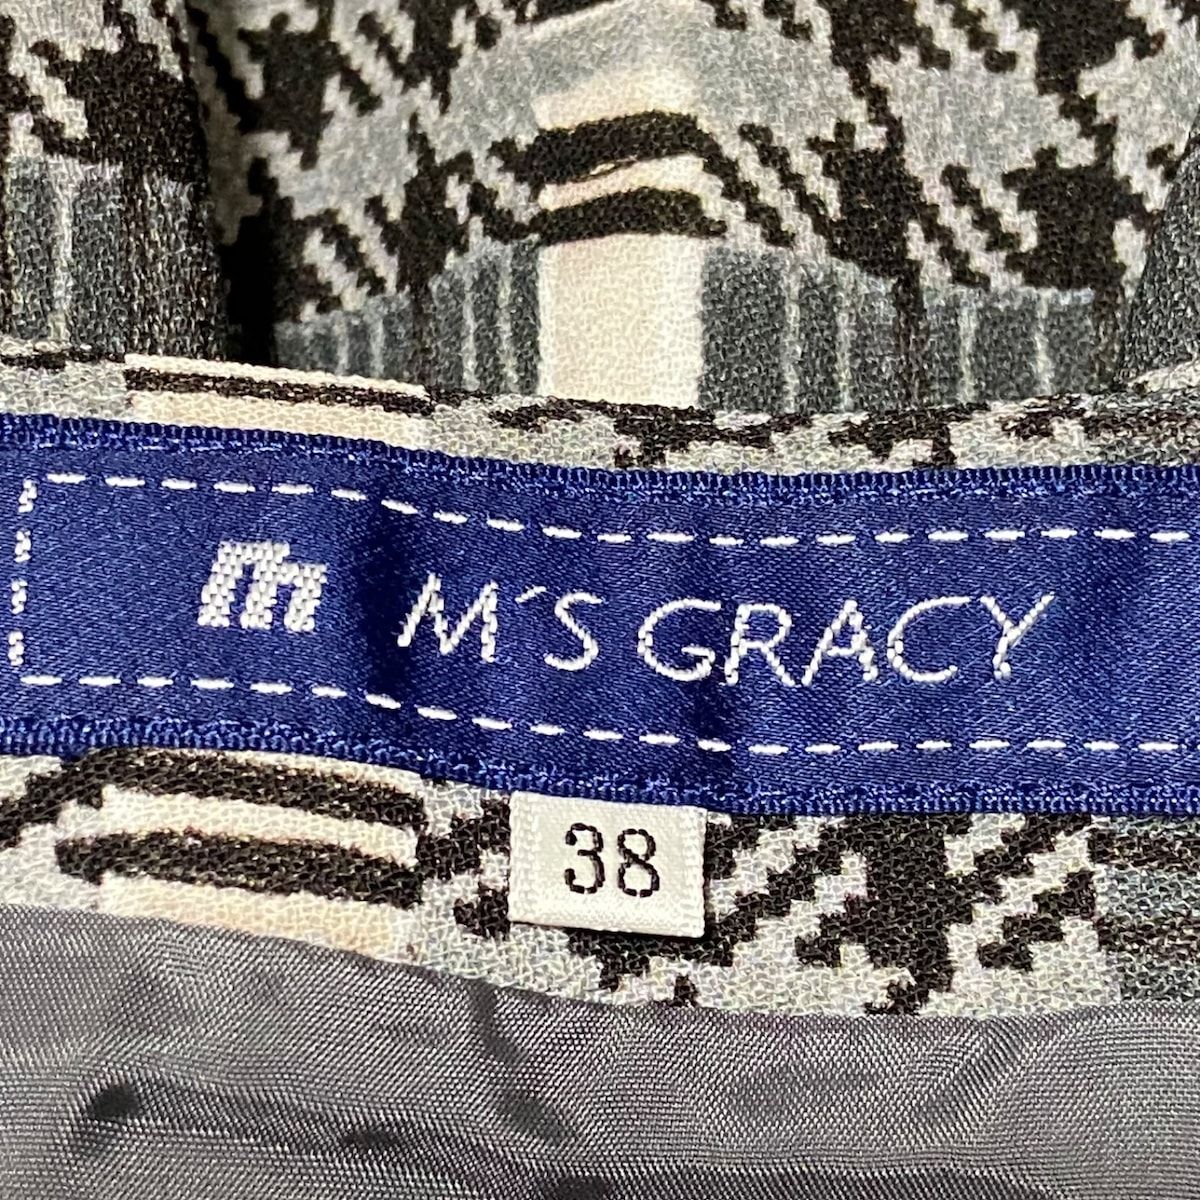 M'S GRACY(エムズグレイシー) スカート サイズ38 M レディース - グレー×ダークグレー×マルチ ひざ丈/千鳥格子柄